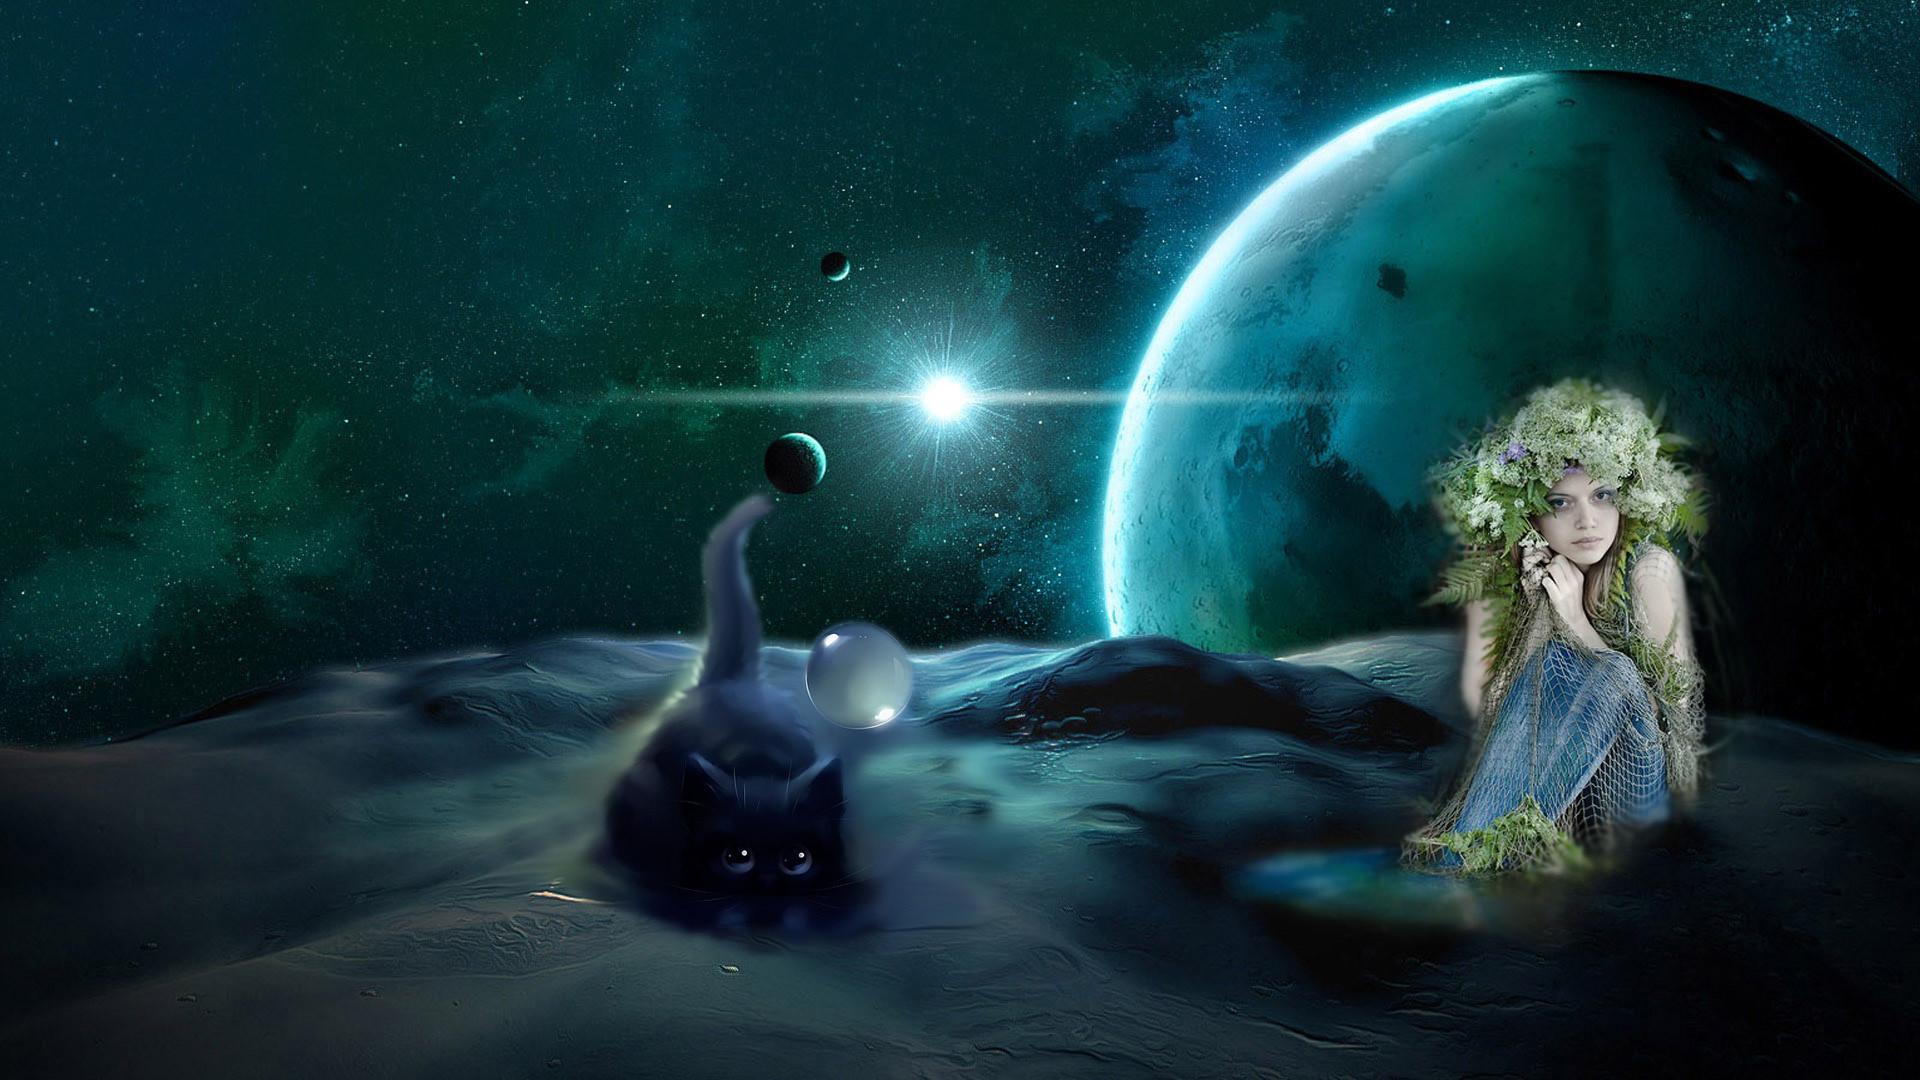 1920x1080 Fantasy fairy gothic dark cats dream sci fi space plantes stars nebula  wallpaper |  | 28951 | WallpaperUP